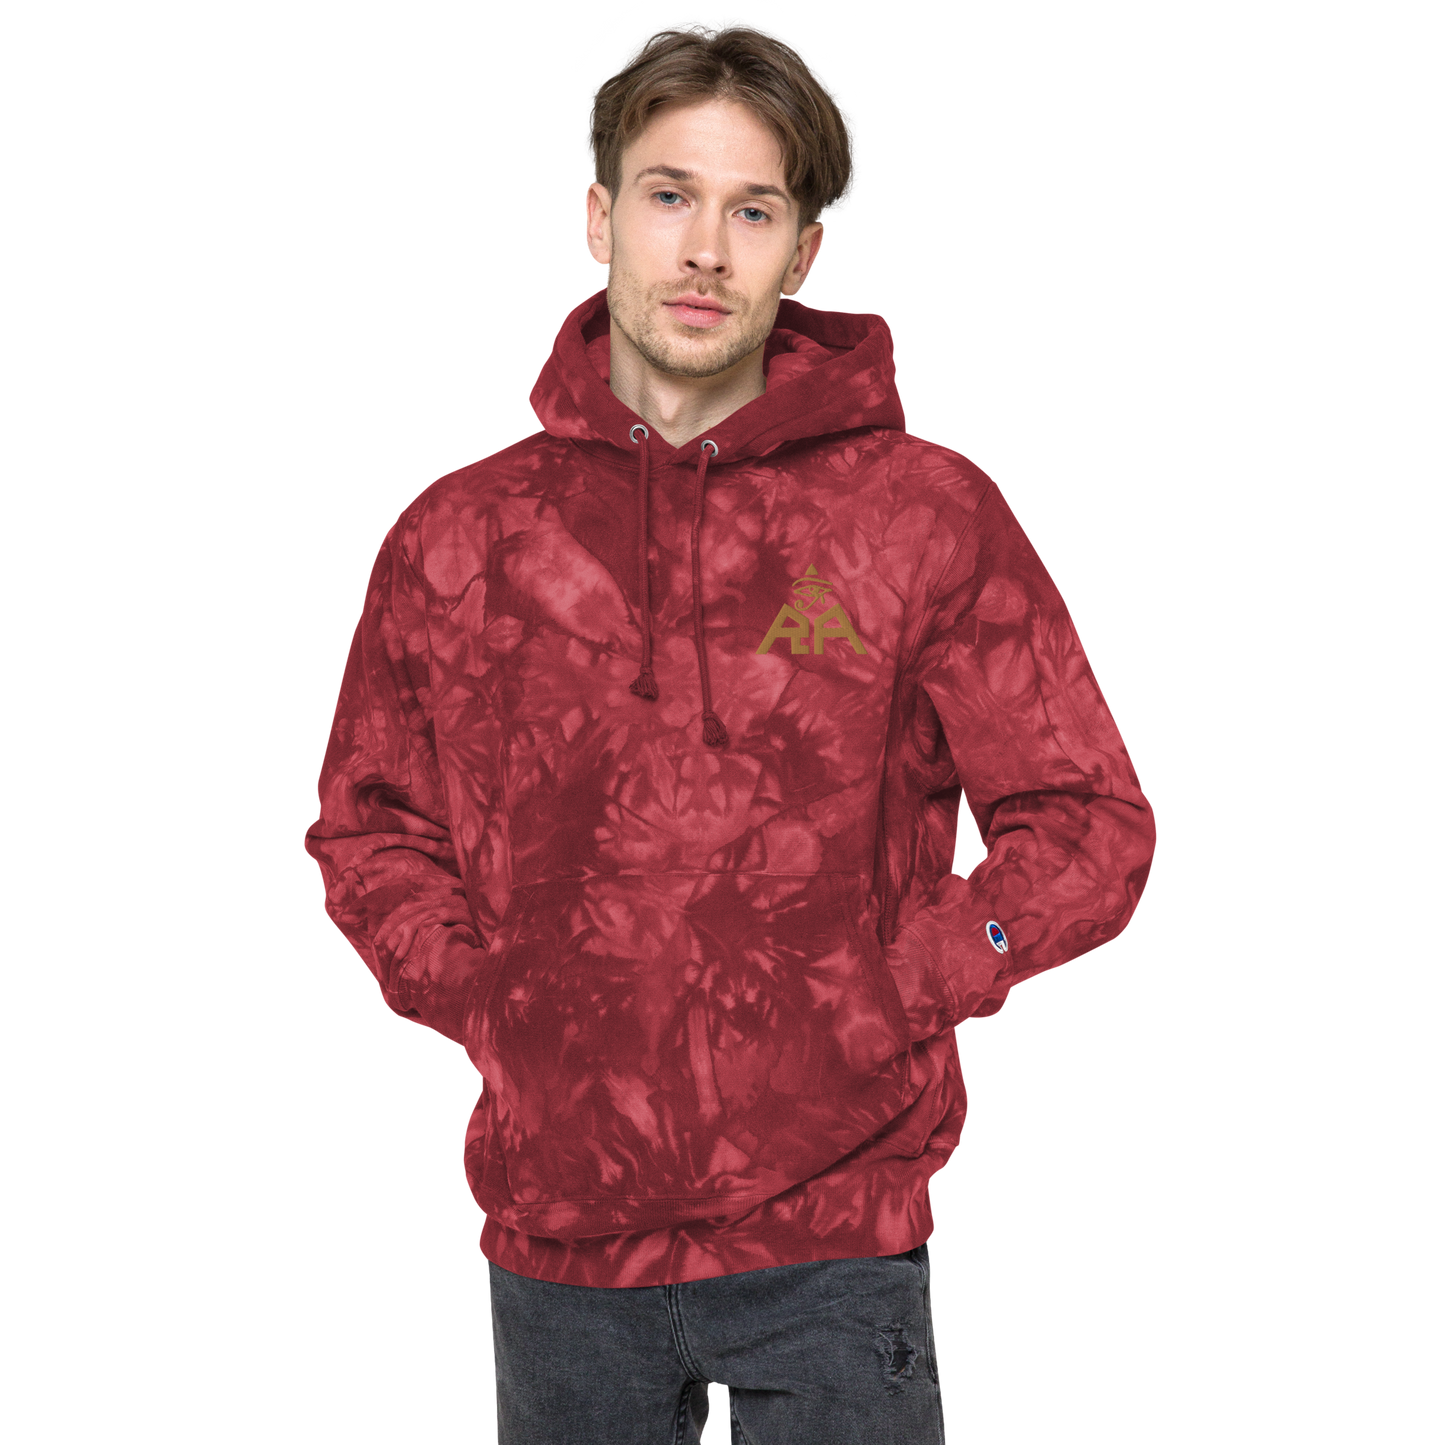 Unisex Champion x RA Brand tie-dye hoodie